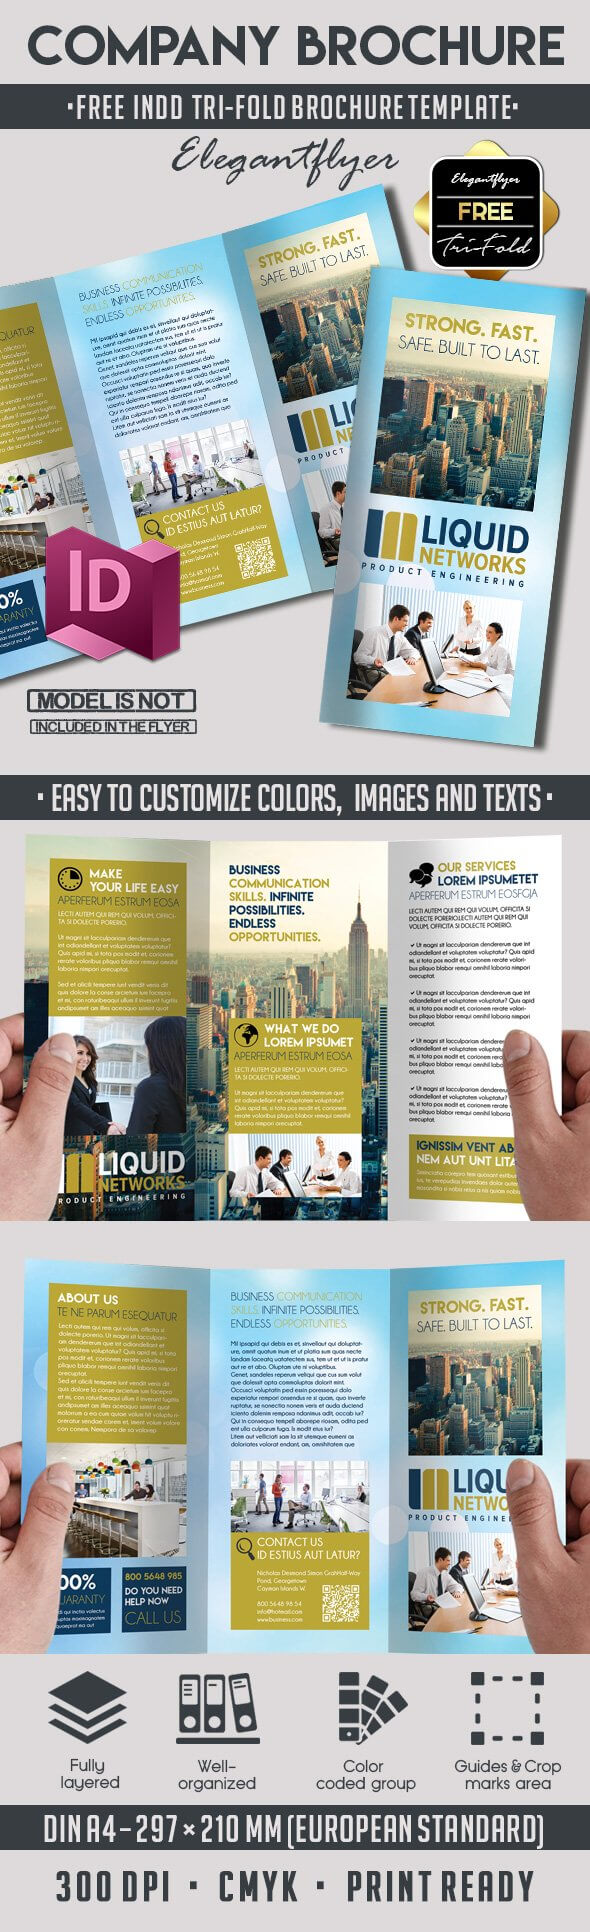 free adobe indesign templates brochure